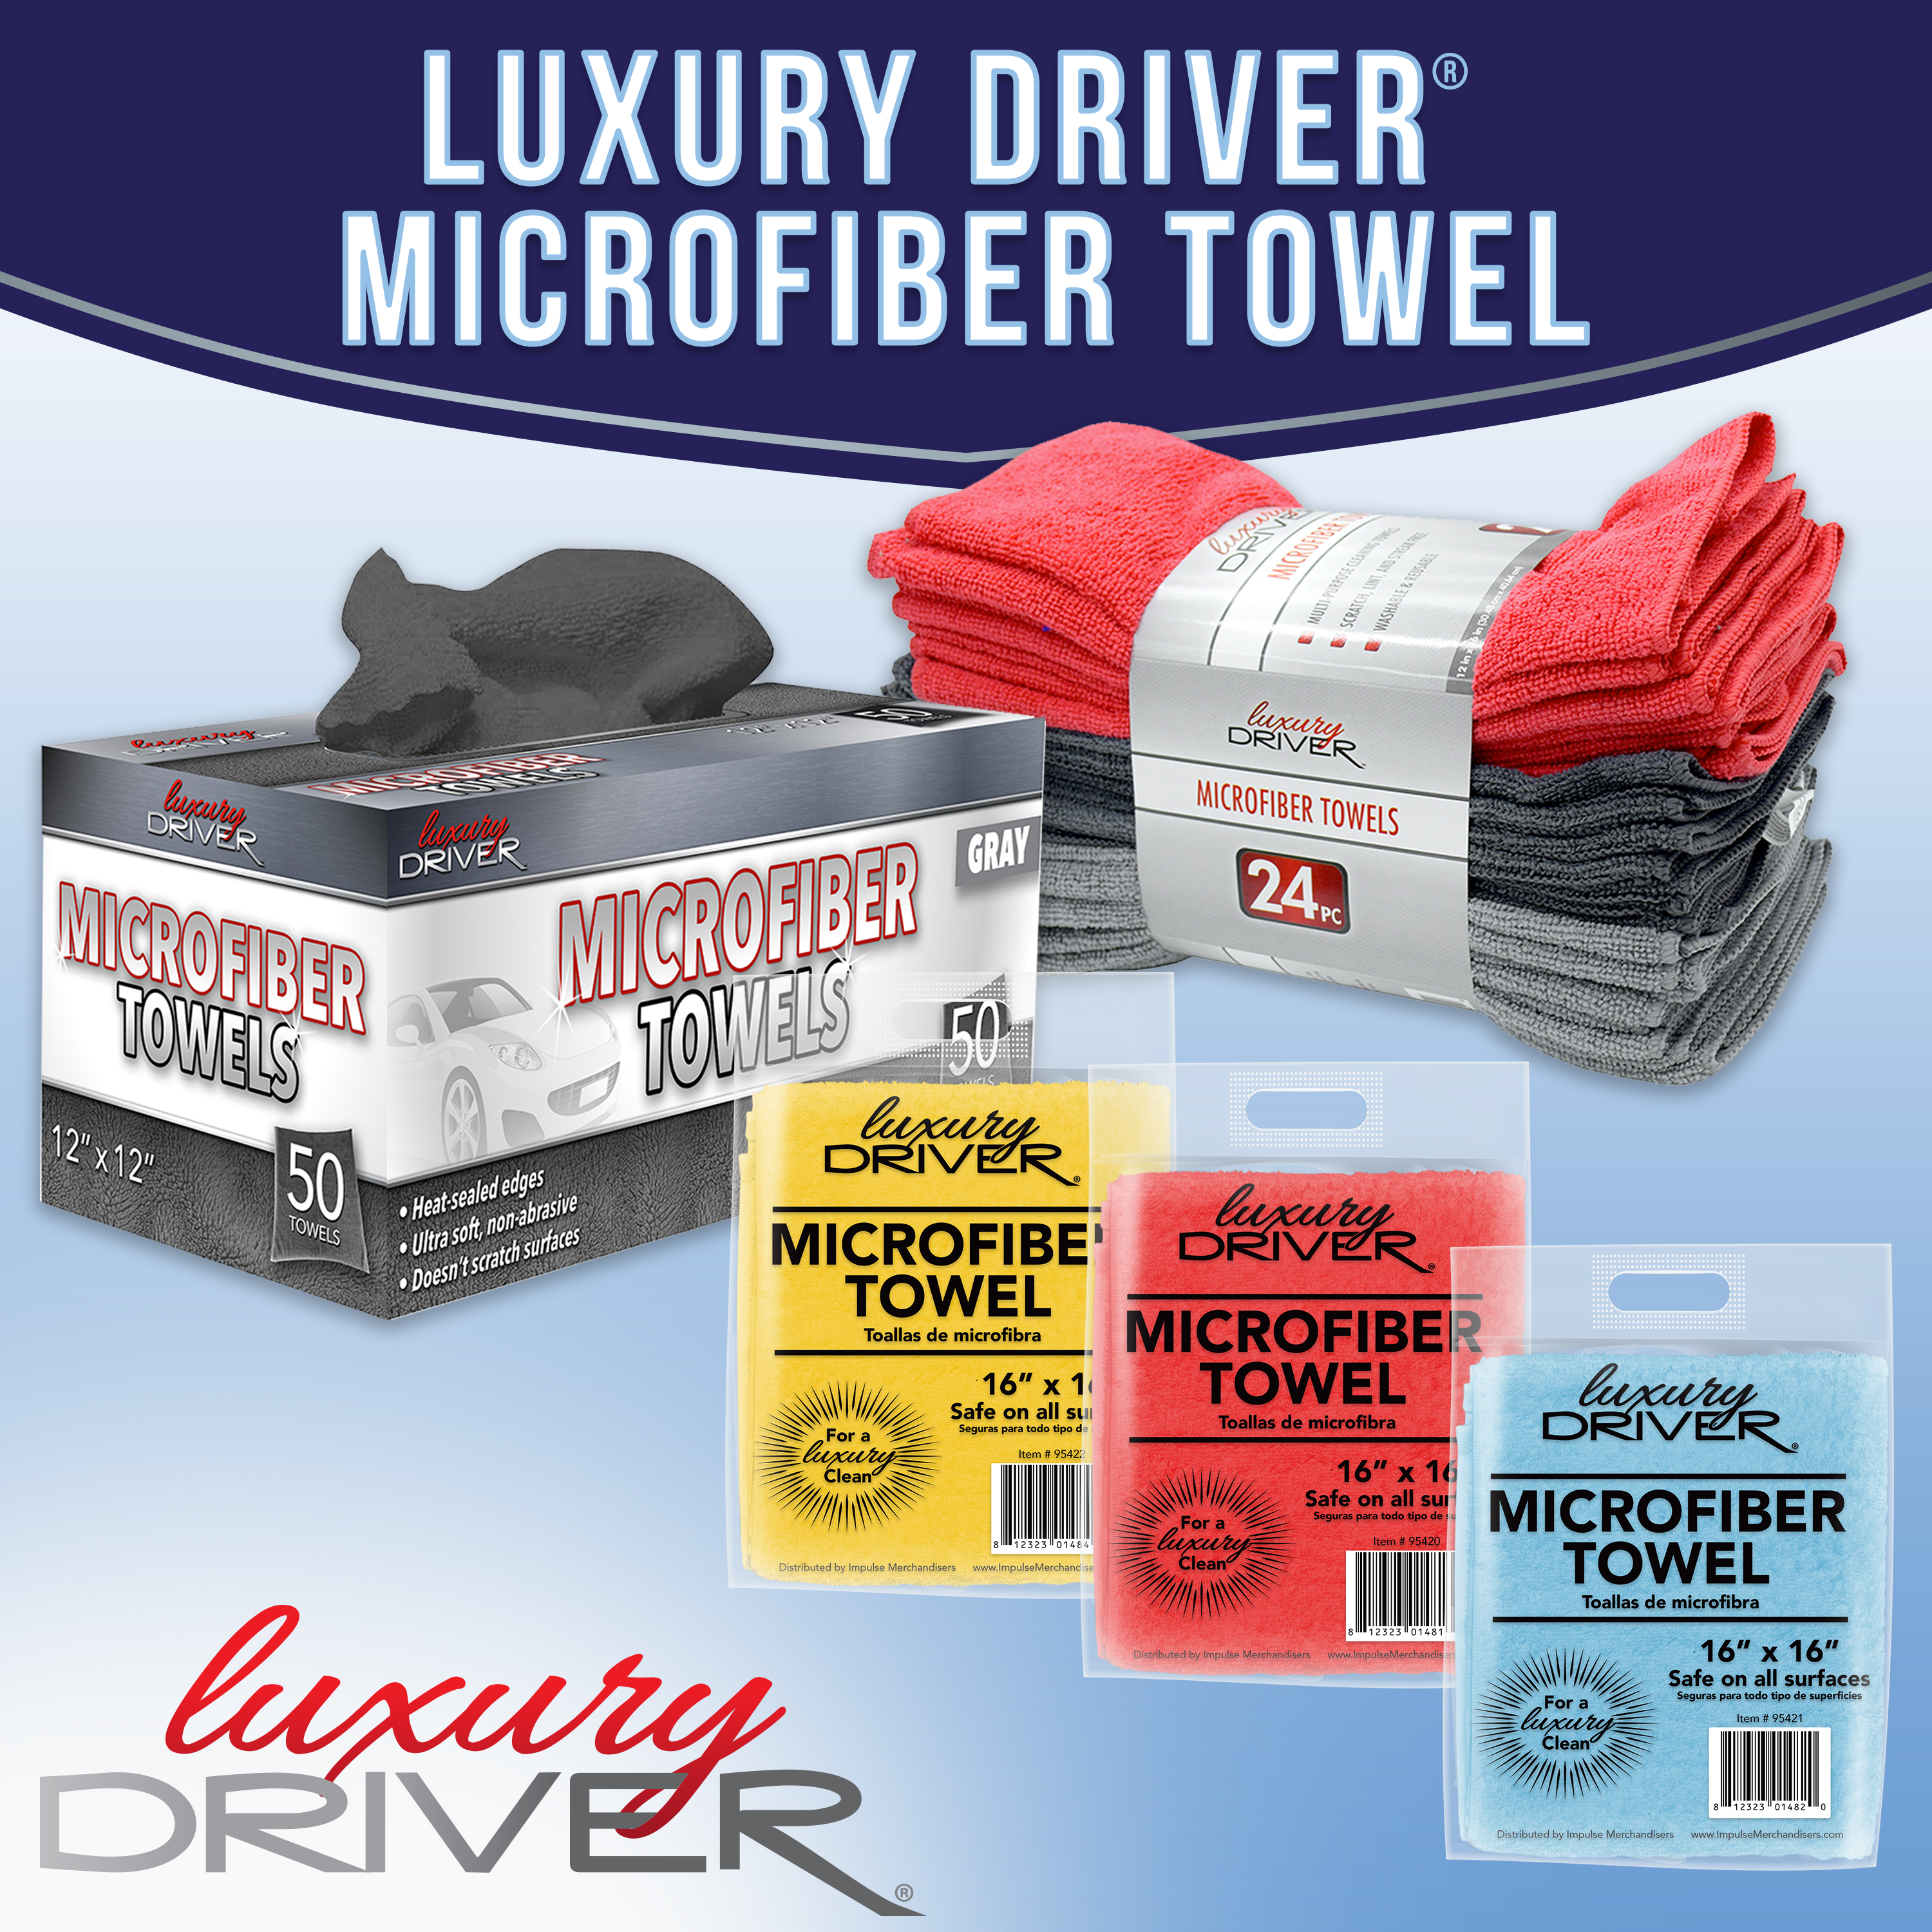 Luxury Driver Microfiber Towels